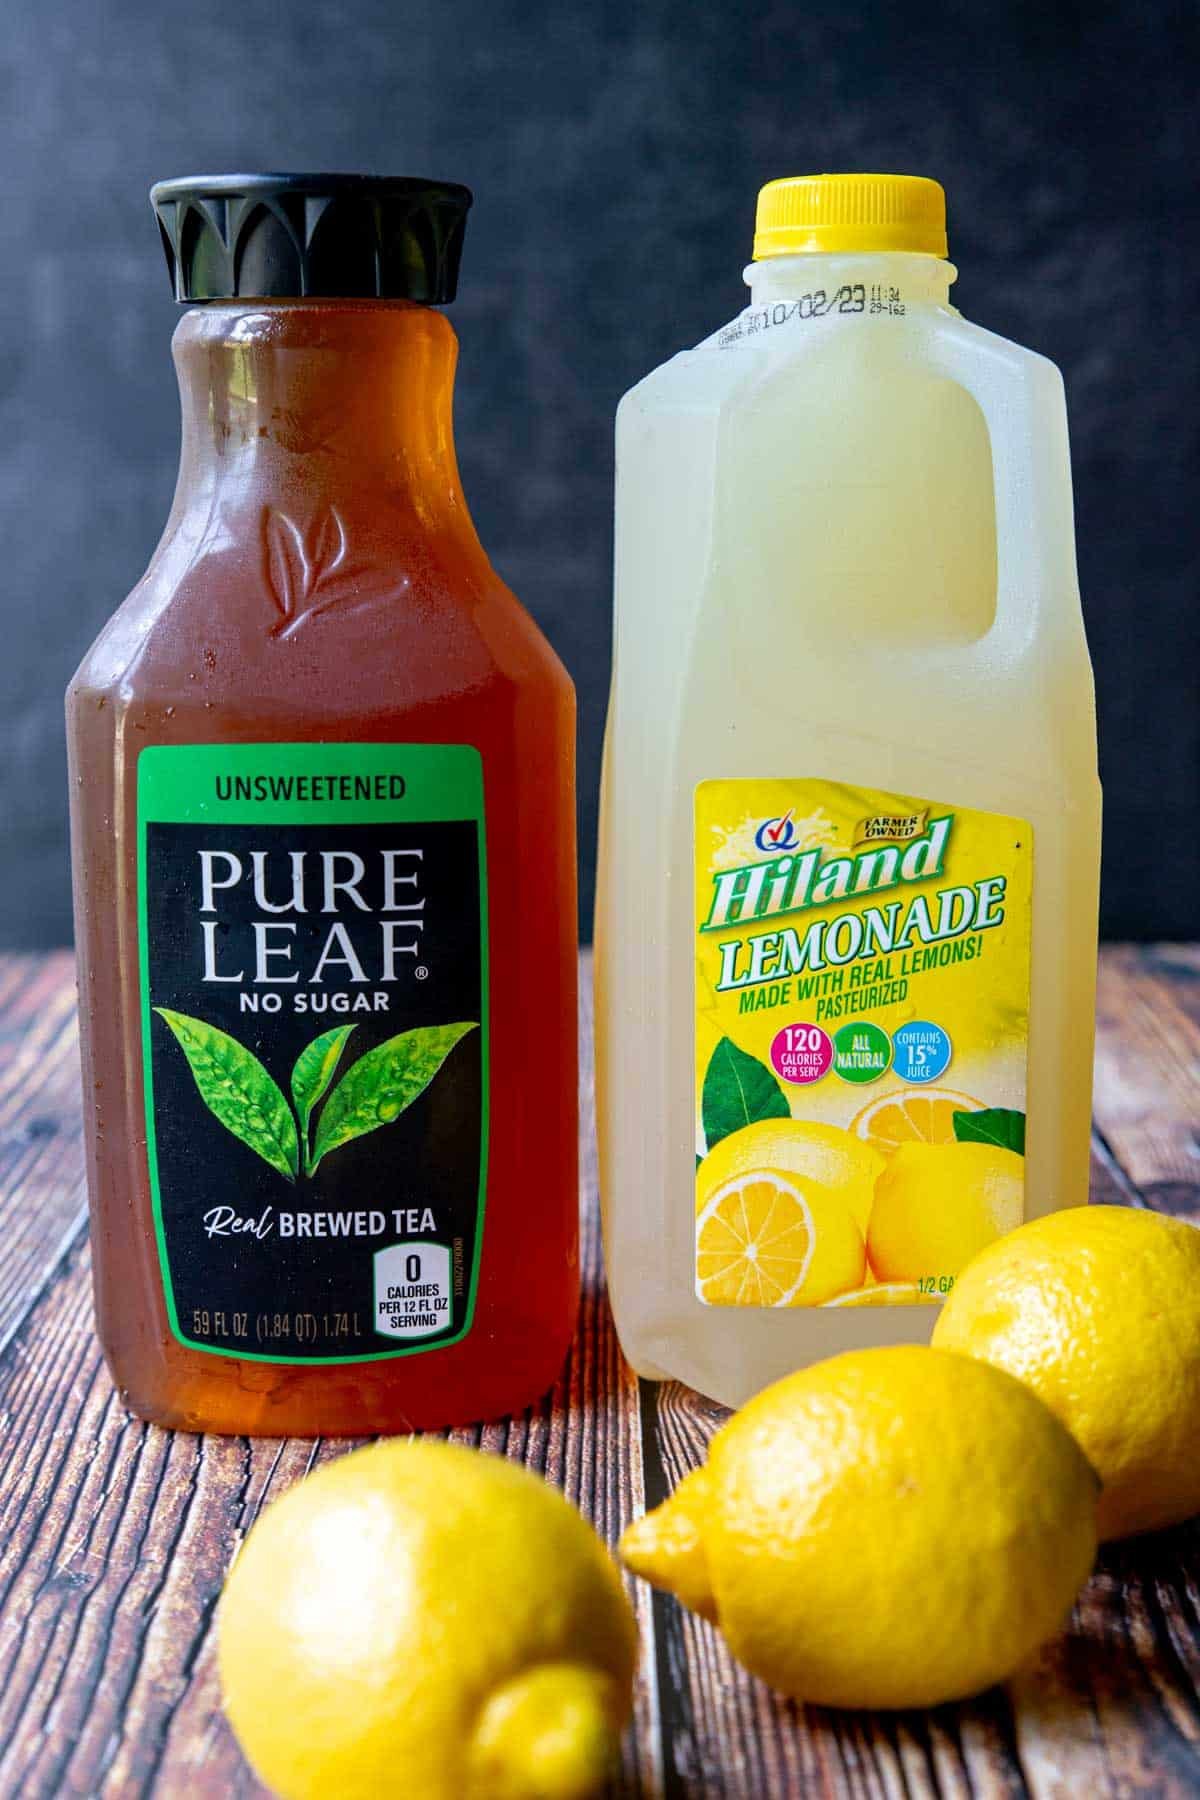 Ingredients for an Arnold Palmer- iced tea, lemonade and lemons